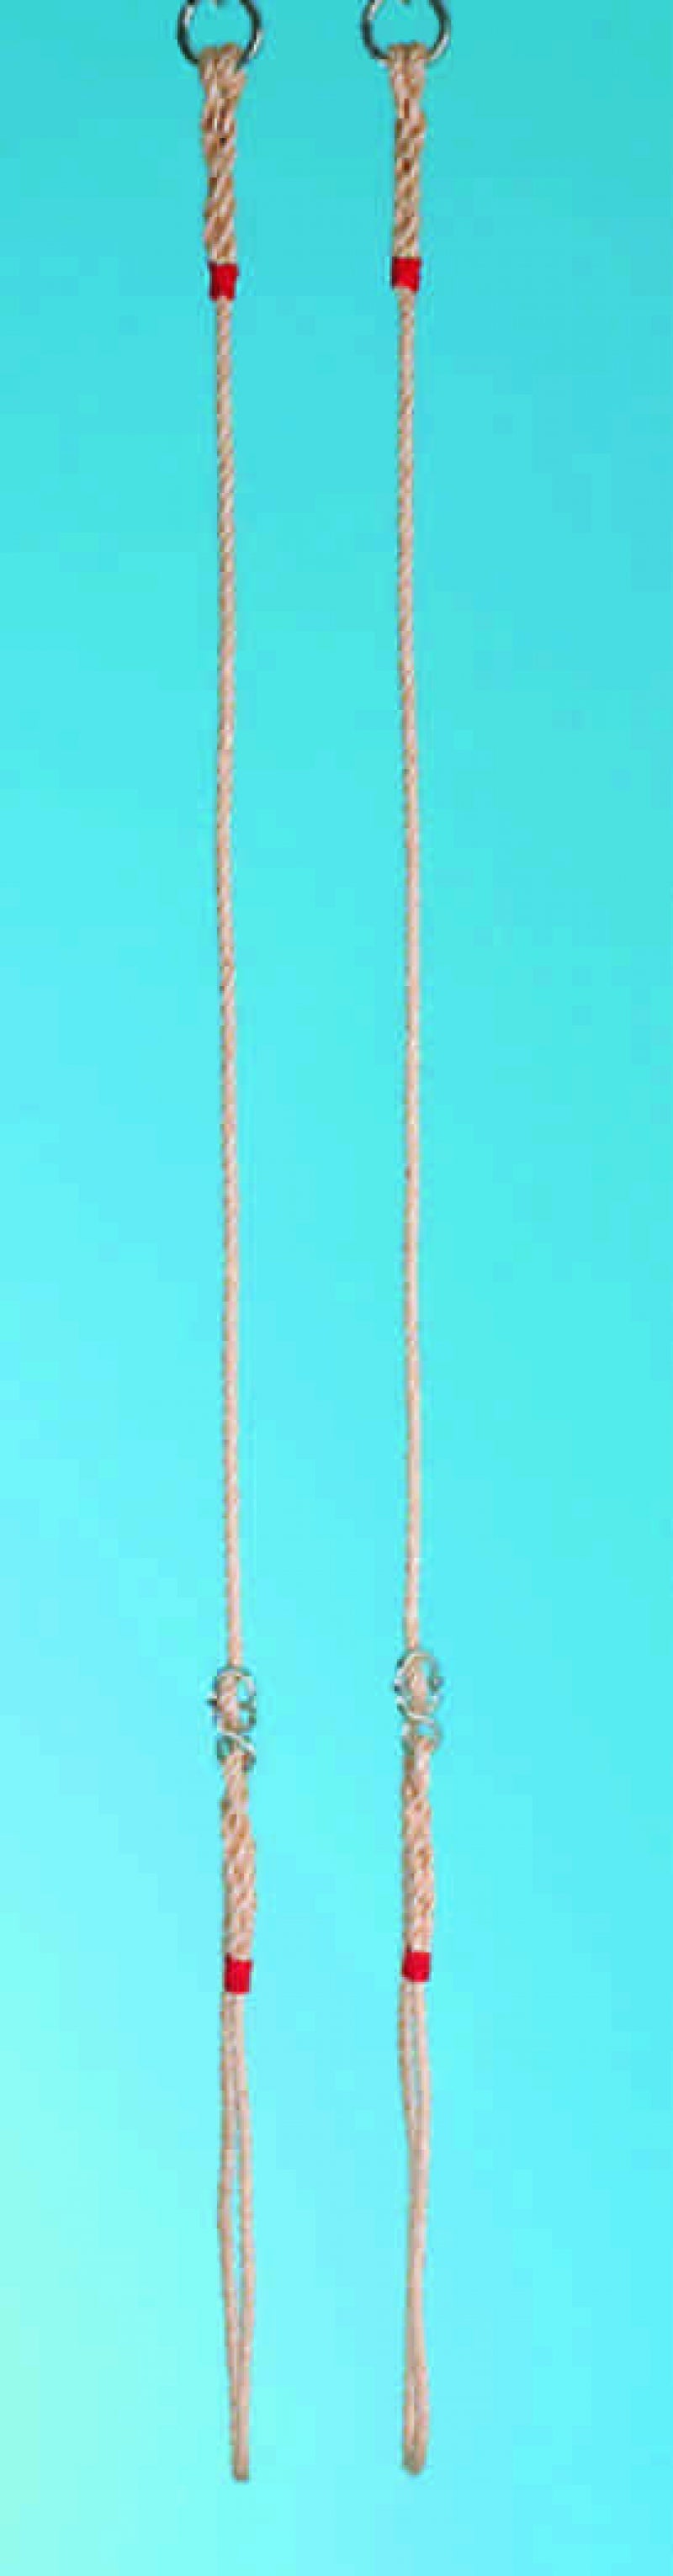 NHF NHF Zubehör: Seilset für Gymnastikgeräte (2 Meter / Sisal)